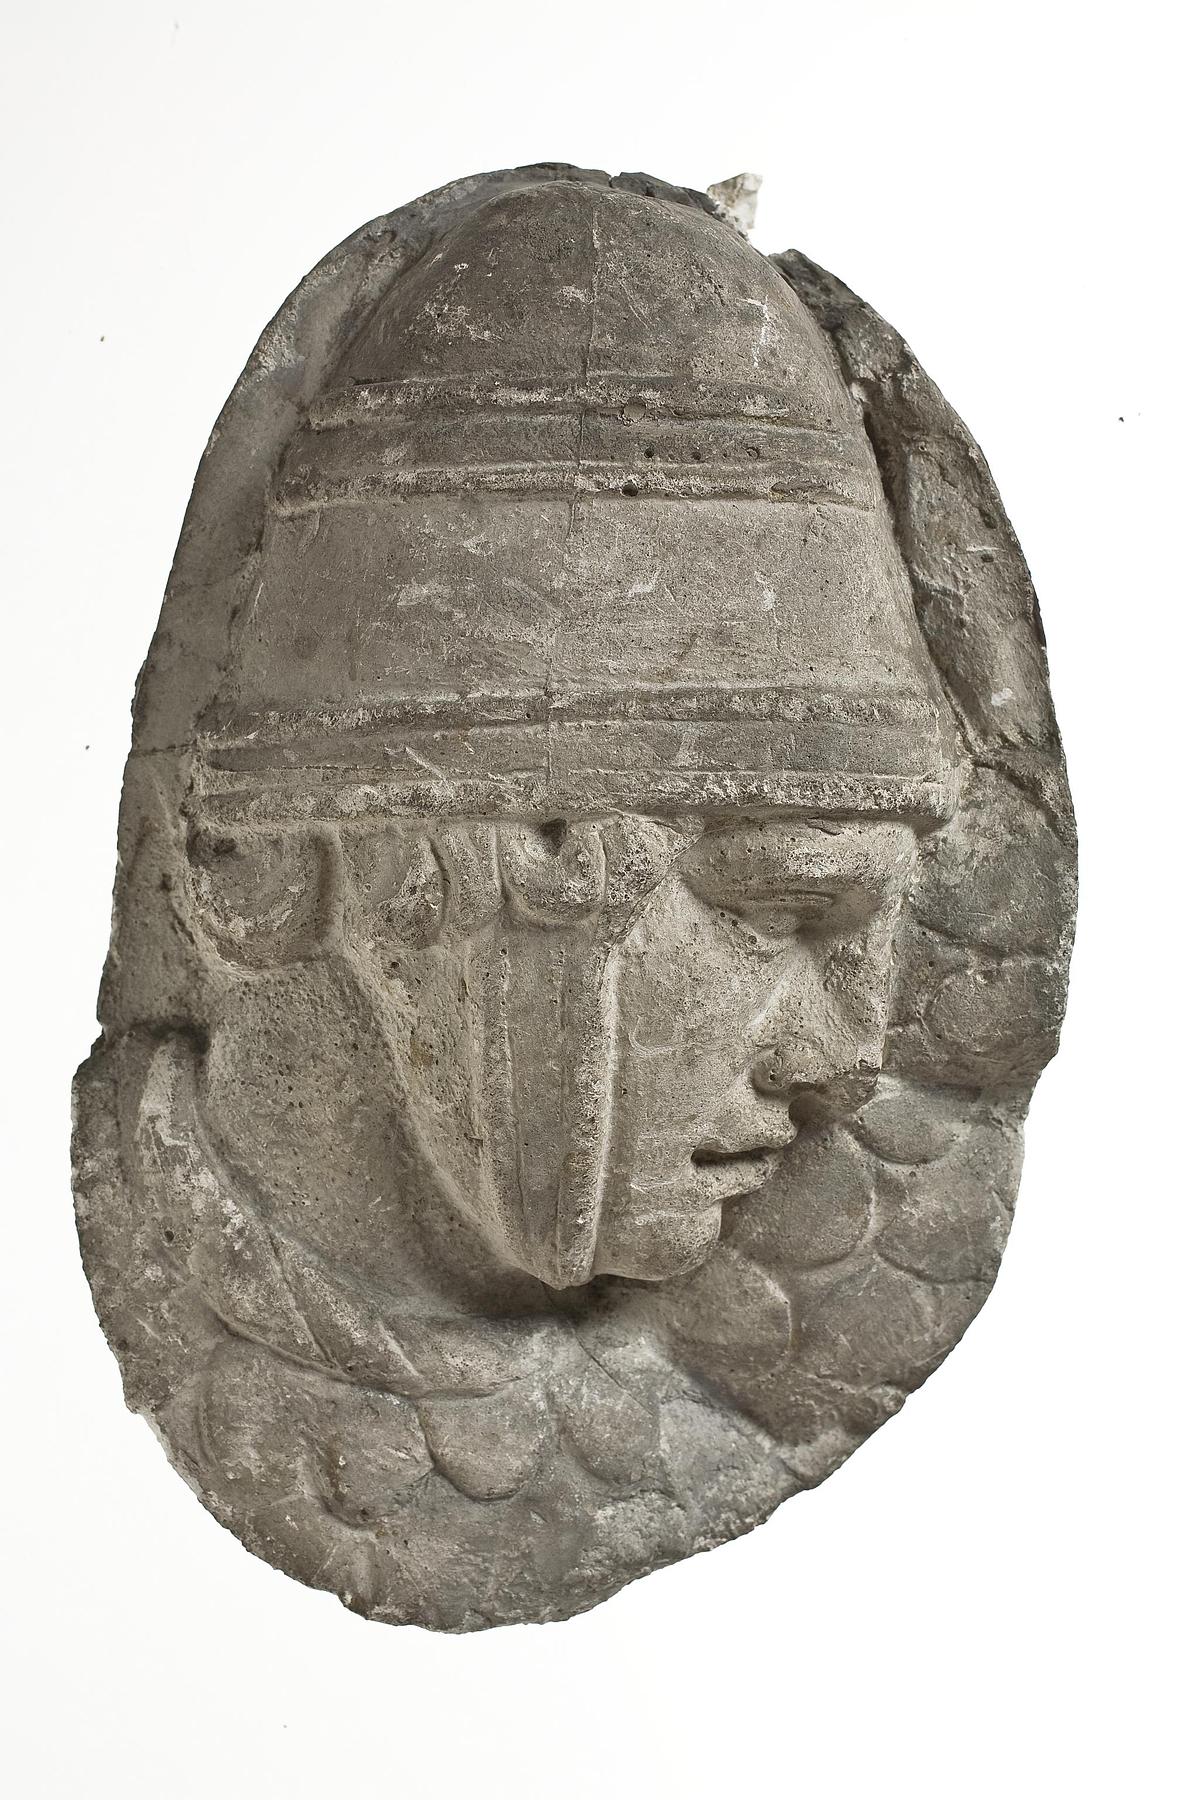 Heads of Sarmatian horsemen wearing conical helmets, L333c